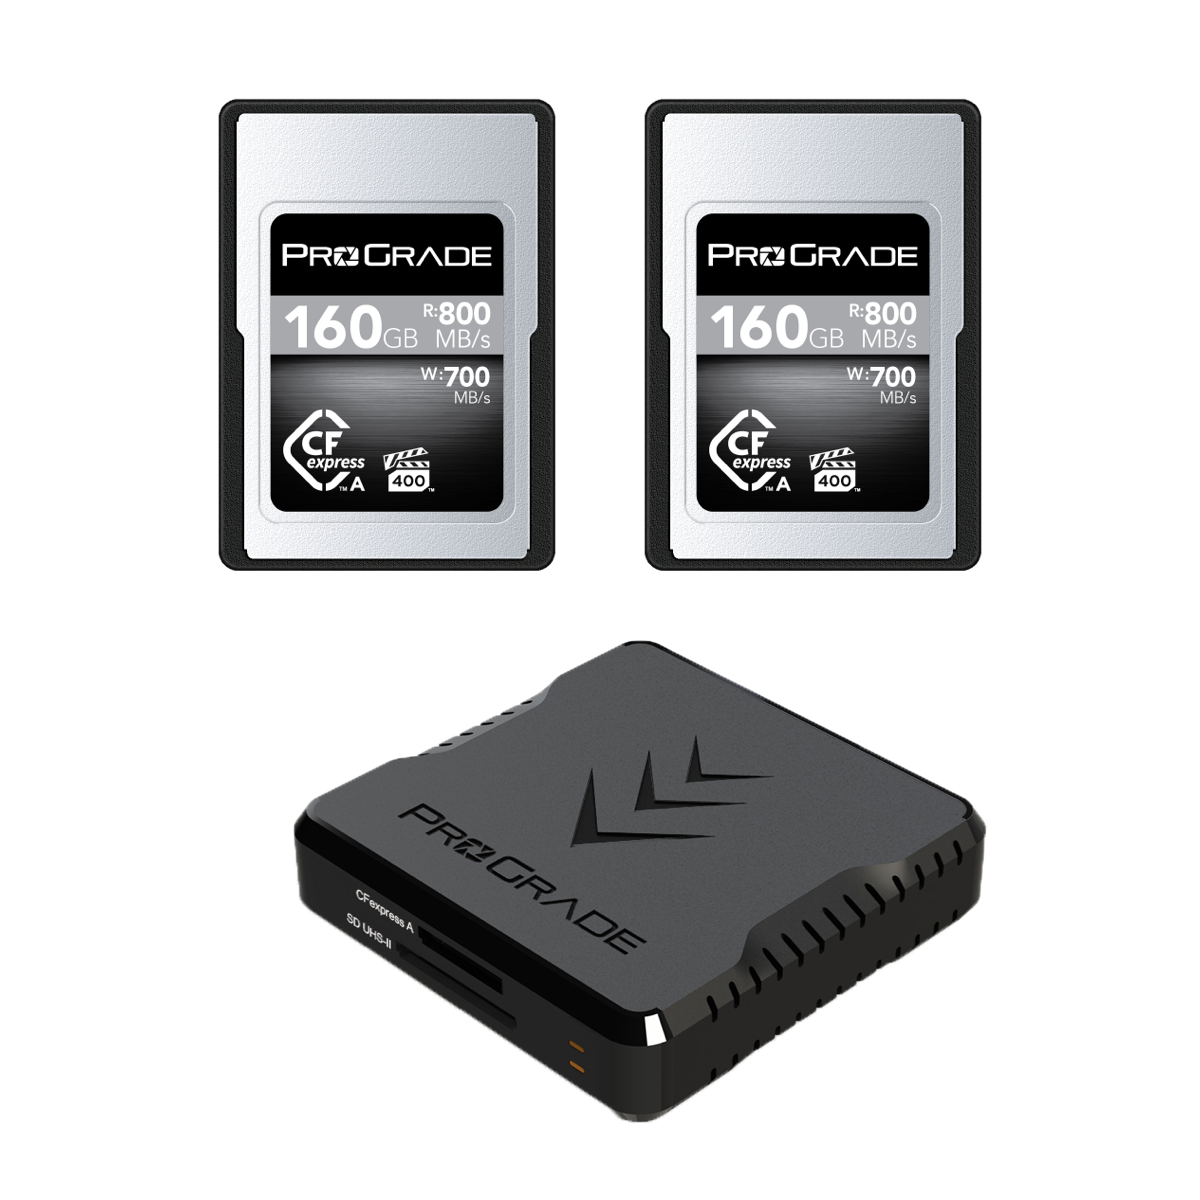 CFexpress Type A & Memory Card Reader Bundles | ProGrade Digital